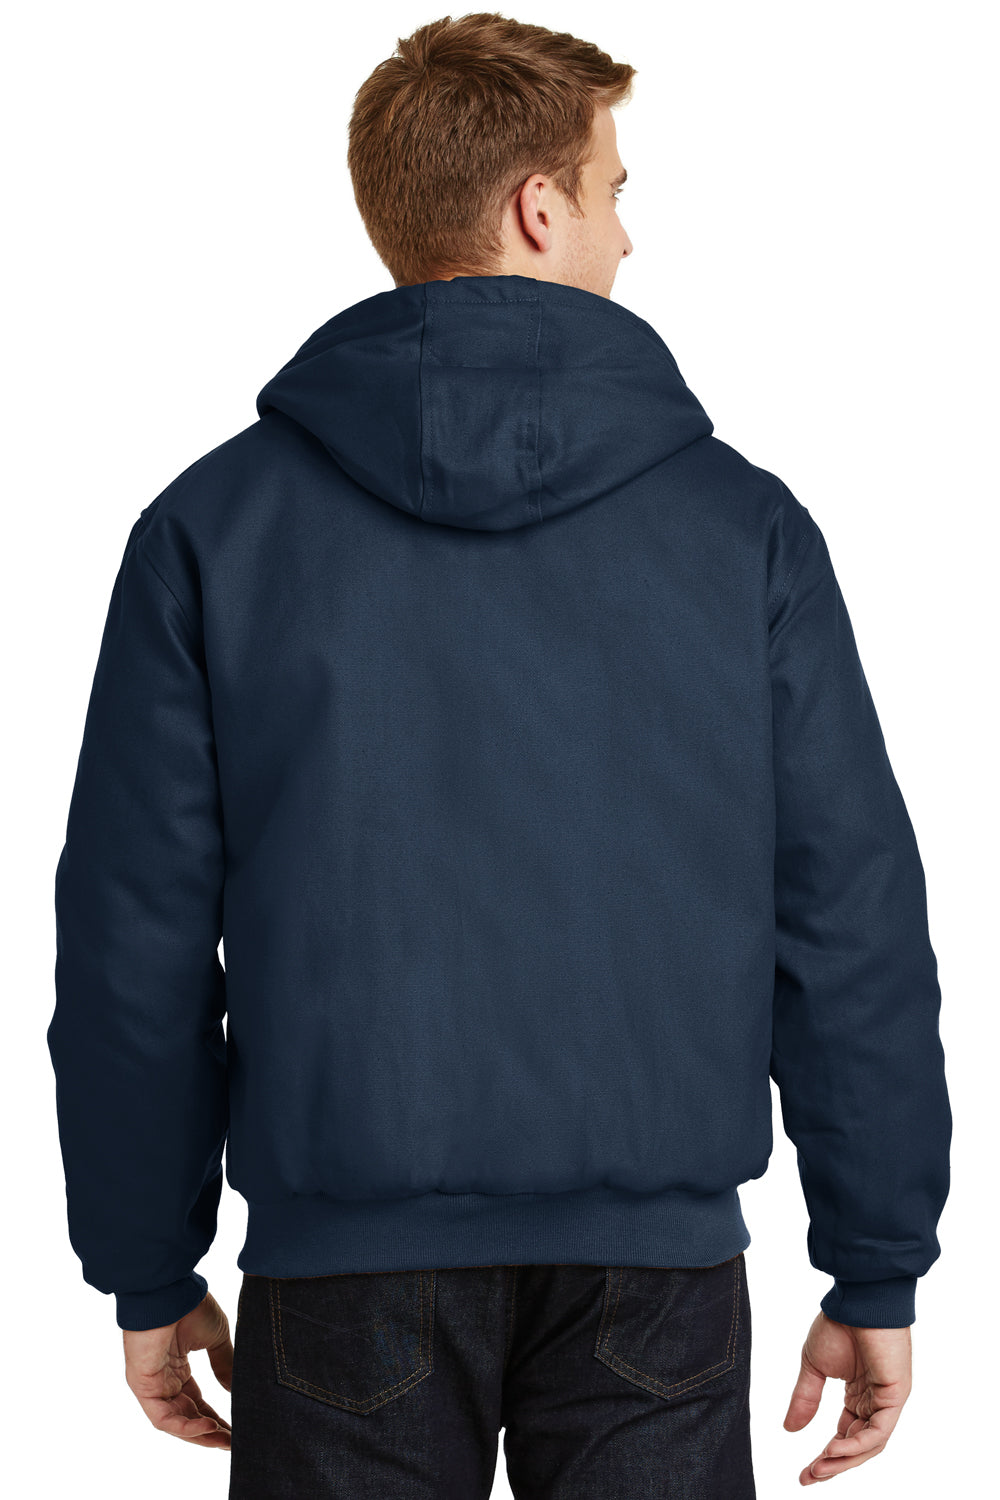 CornerStone J763H Mens Duck Cloth Full Zip Hooded Jacket Navy Blue Back